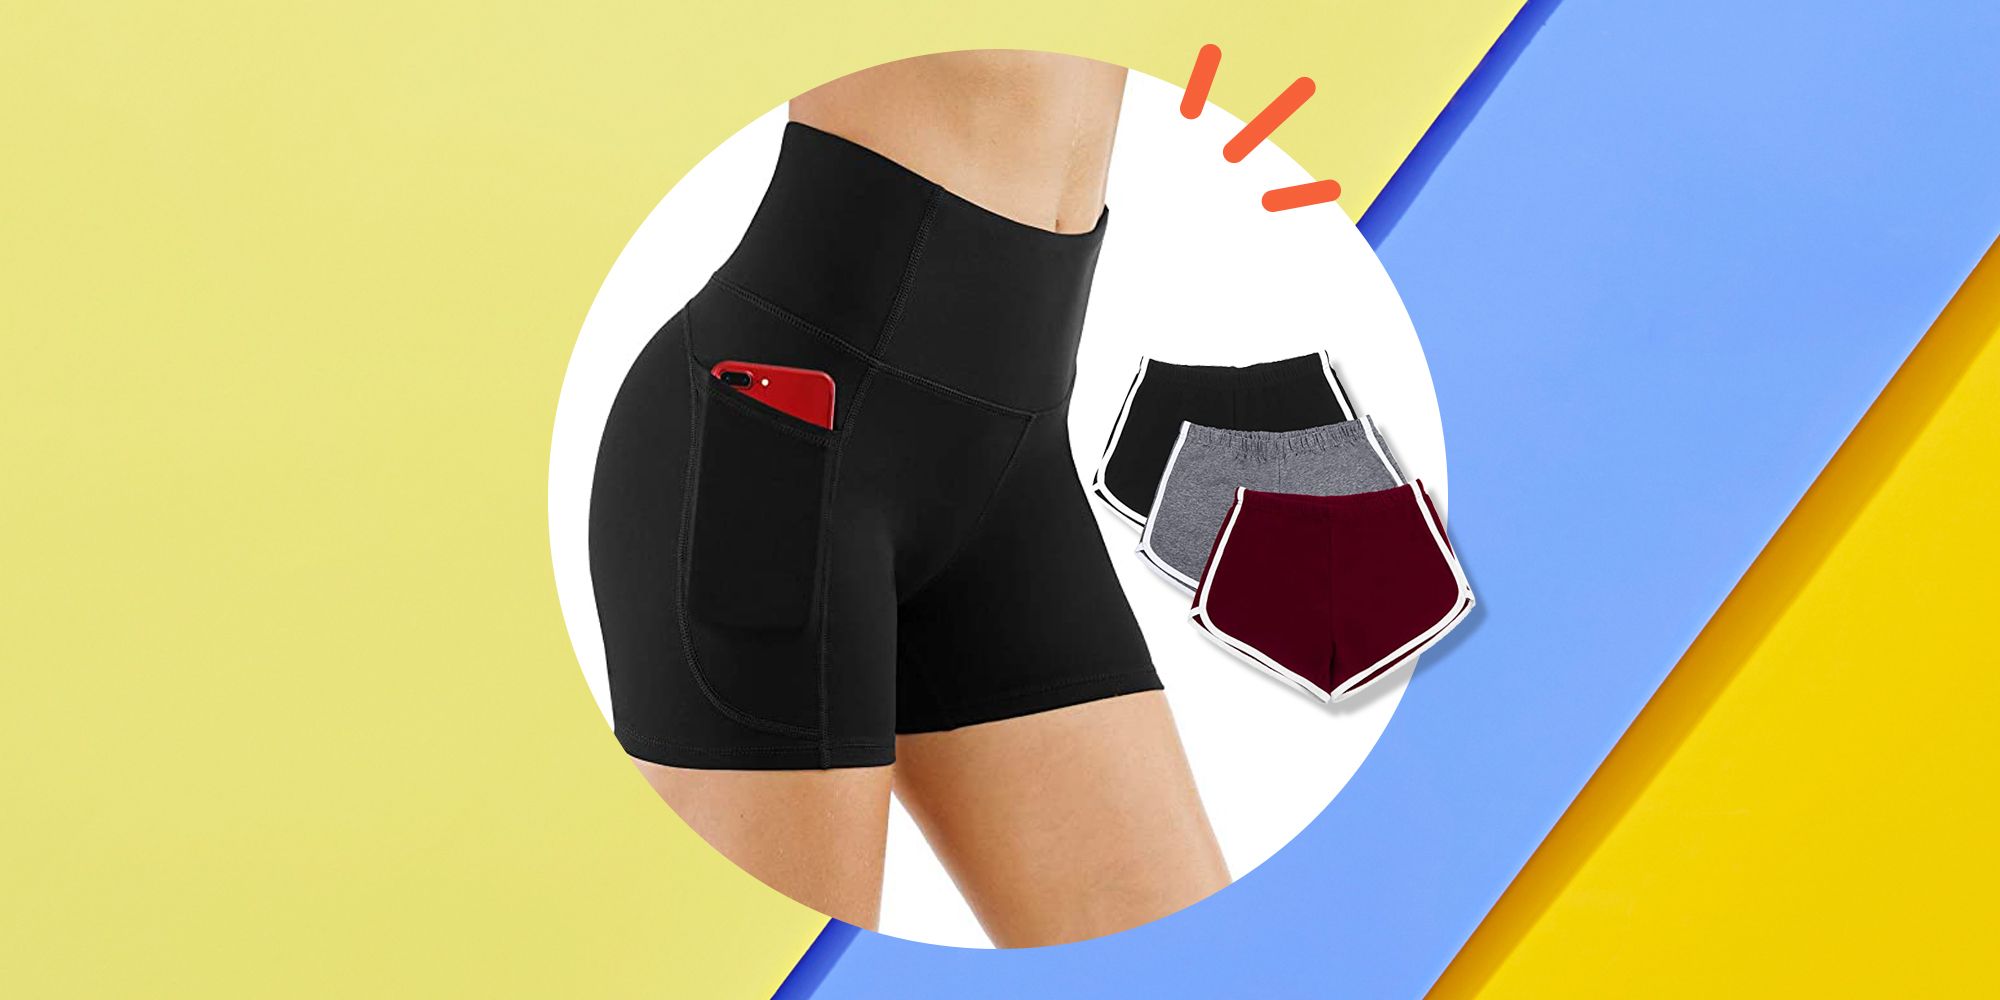 Bovodo High Waist Yoga Shorts with 4 Pockets Tummy Control Workout Sport Legging Non See-Through Yoga Shorts